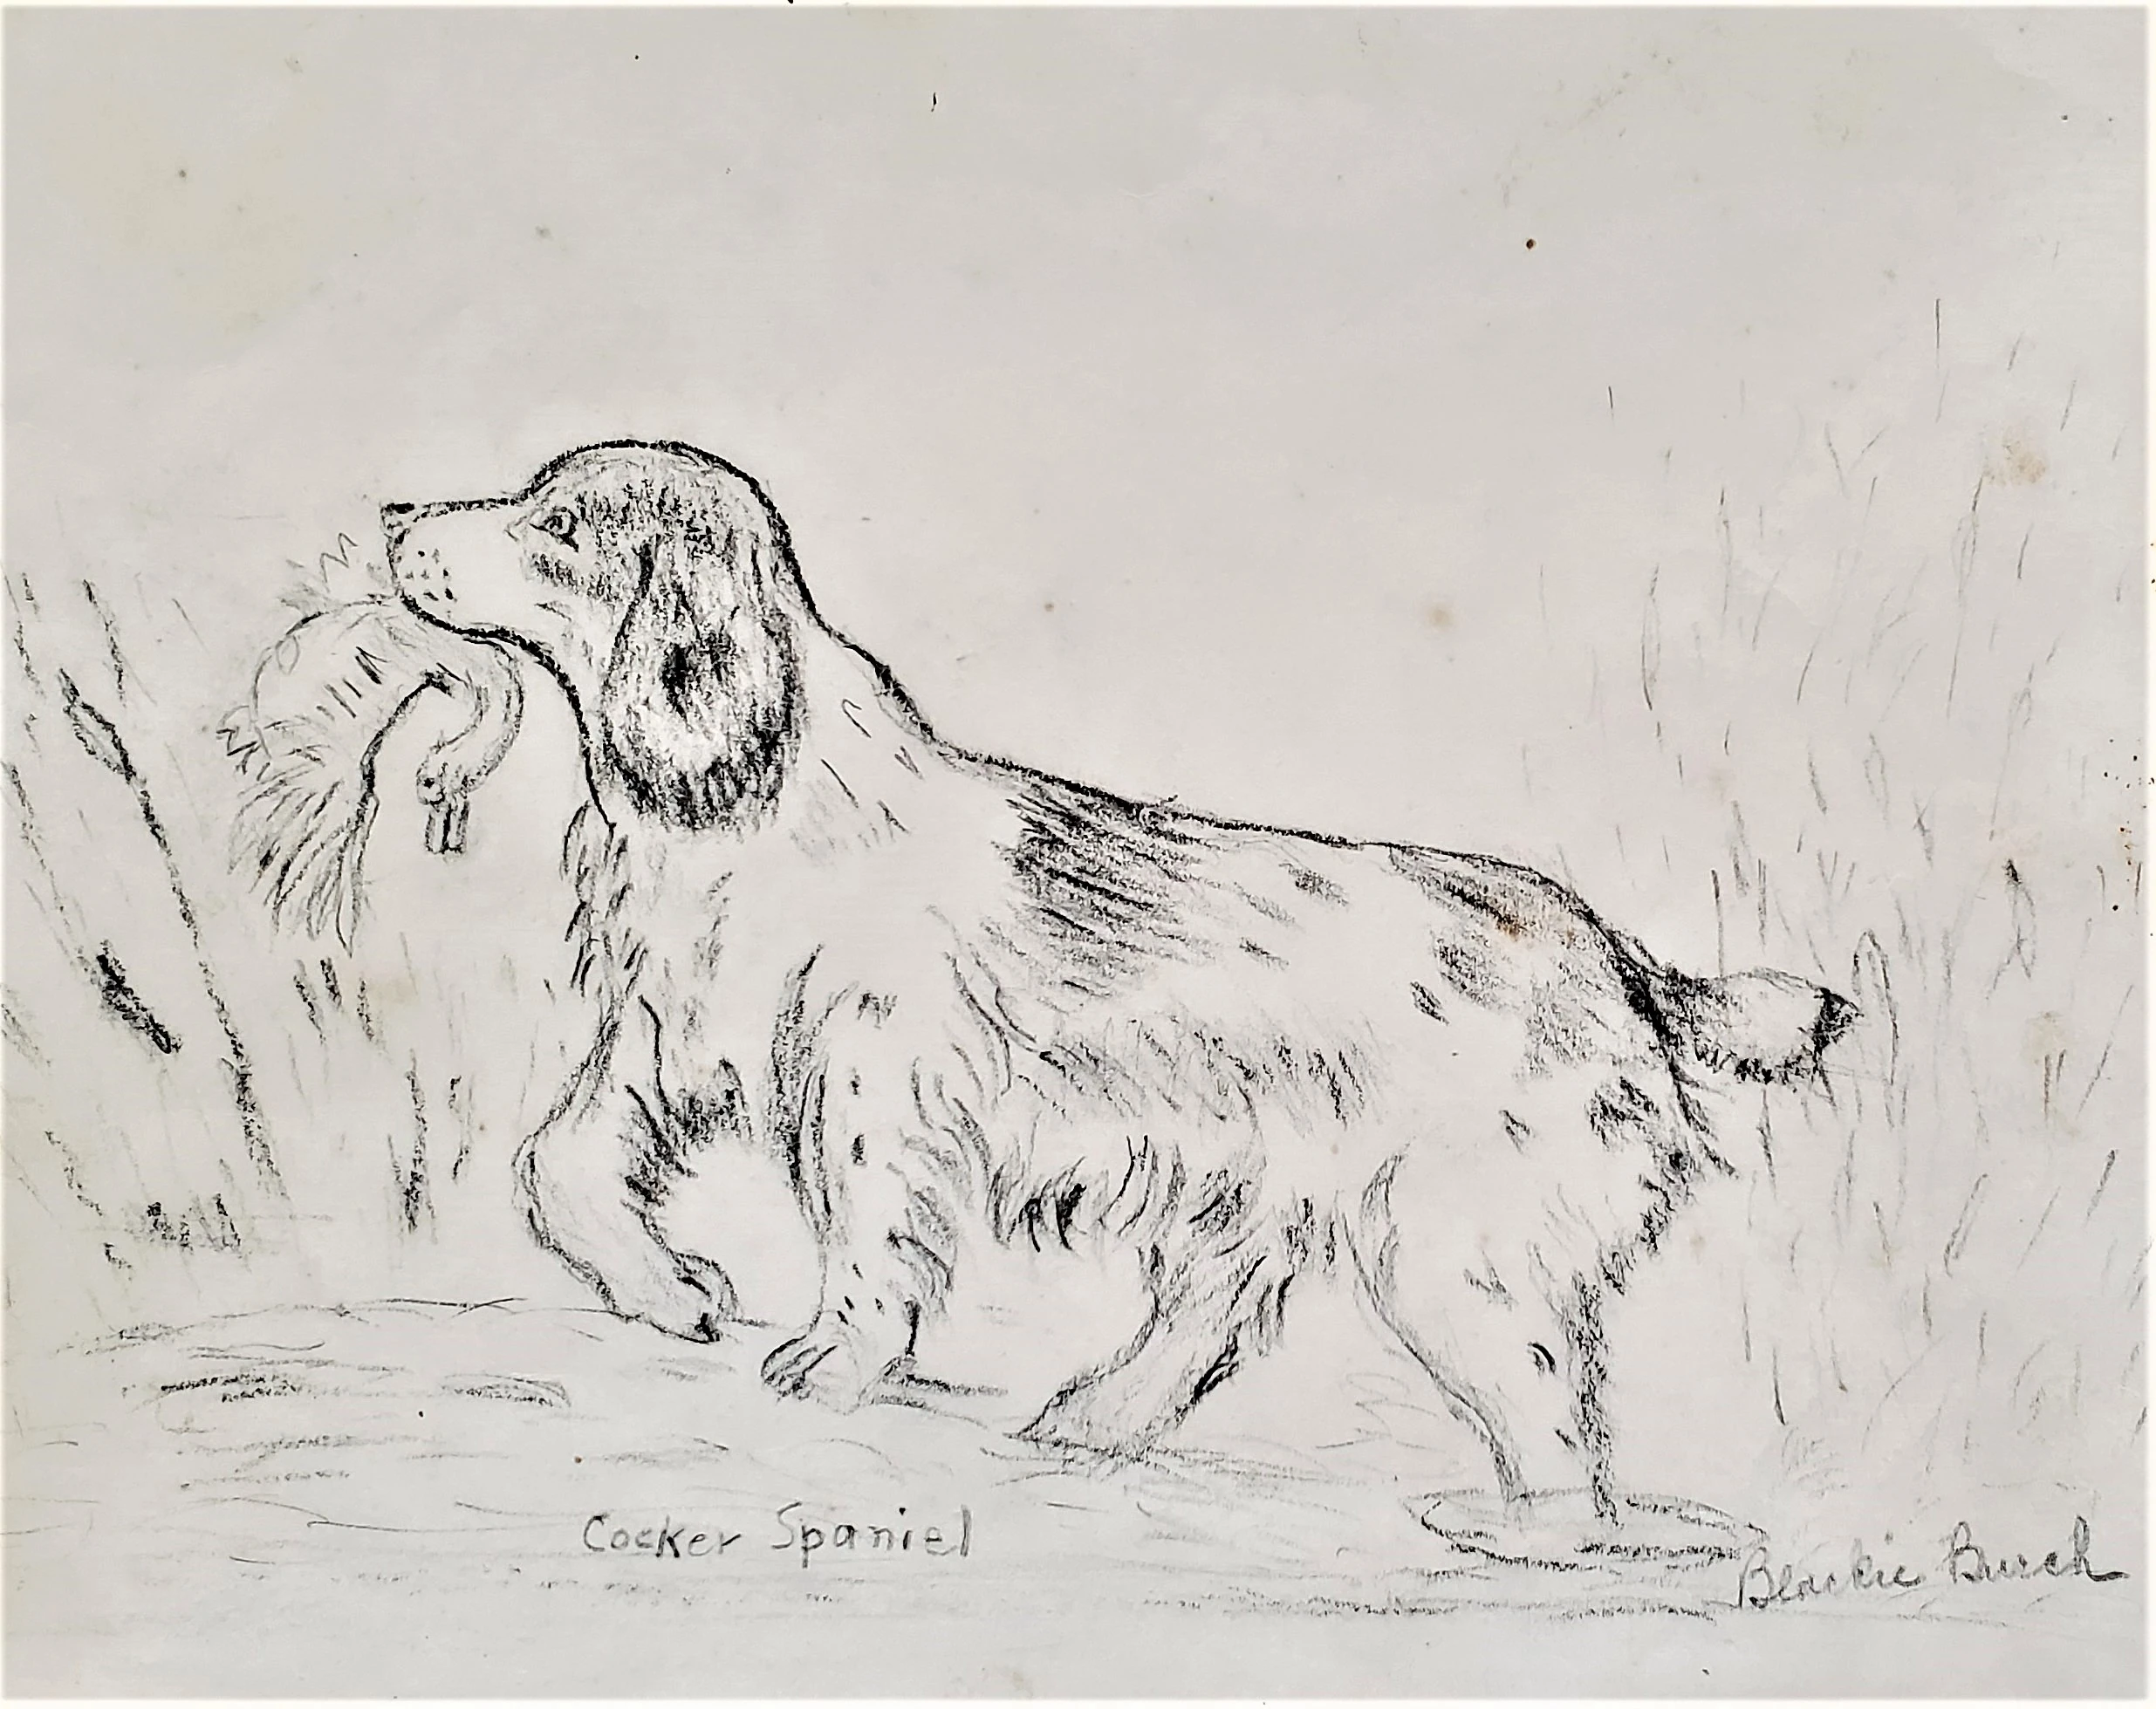 Cocker Spaniel Hunting Dog - Drawing by Birdie Burch - c.1950 - 2008.007.0001